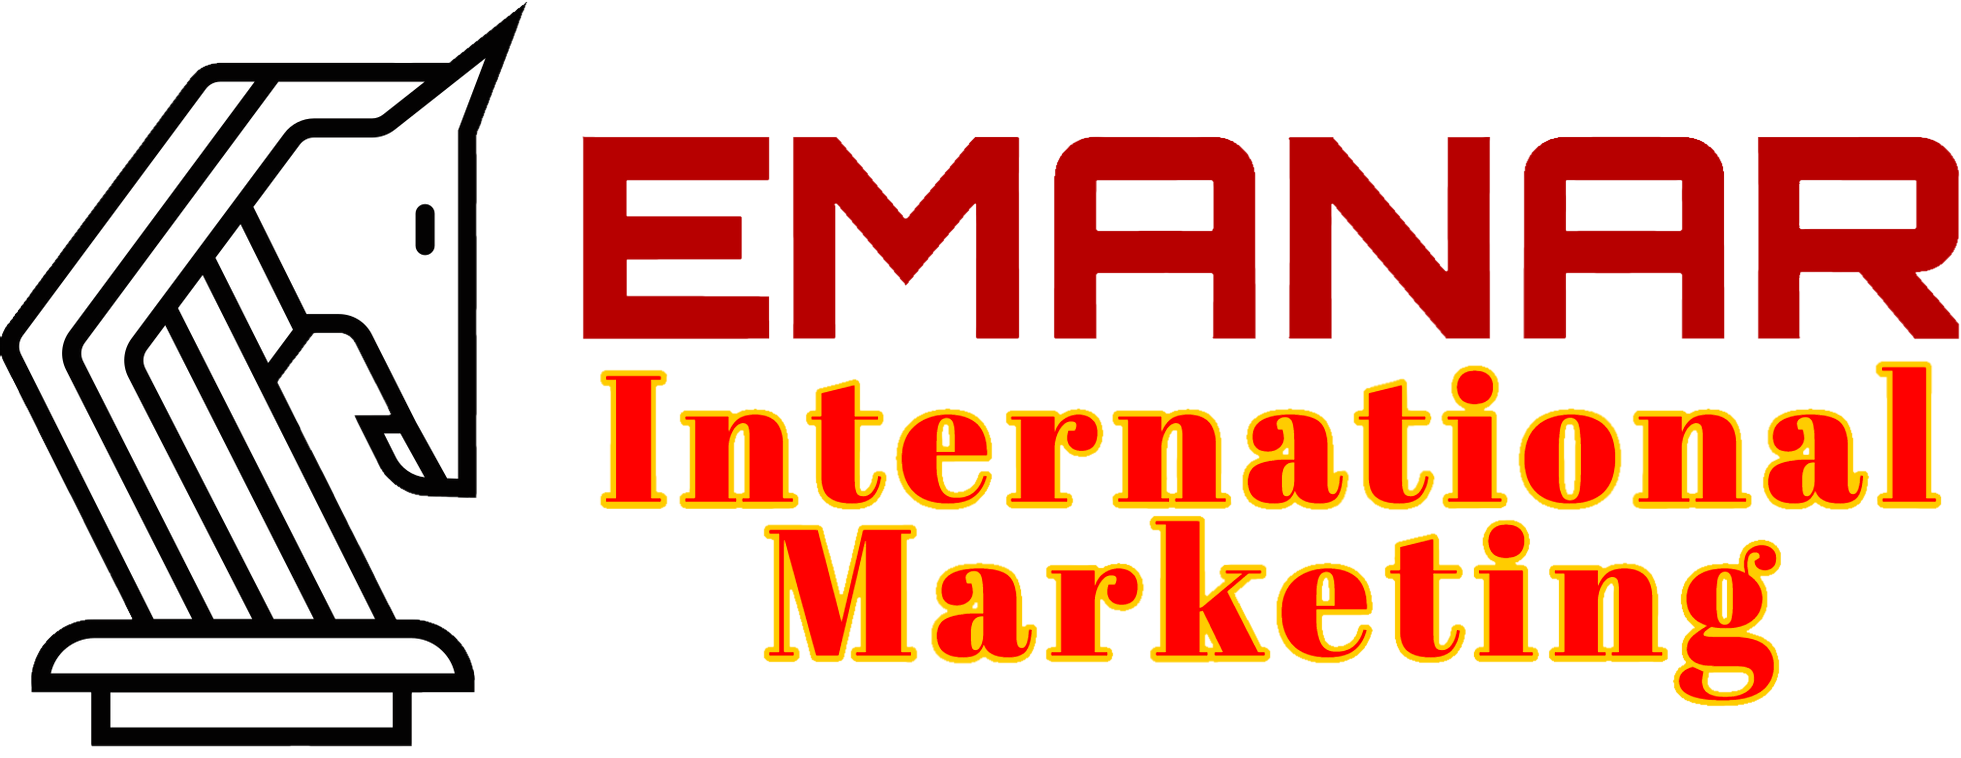 International online marketing